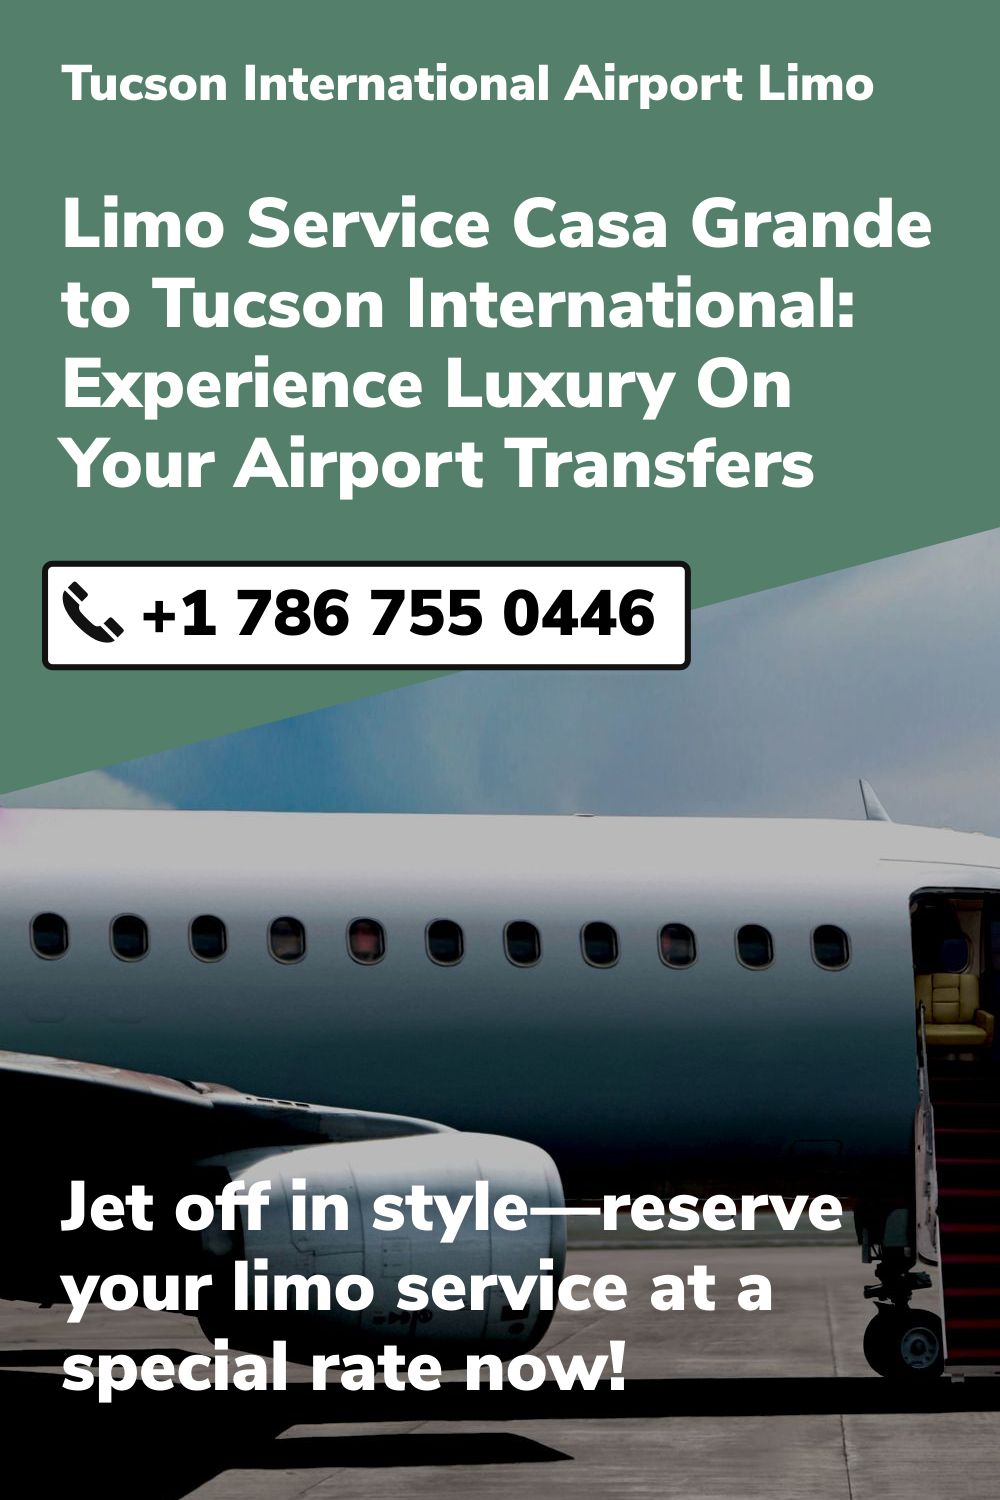 Tucson International Airport Limo